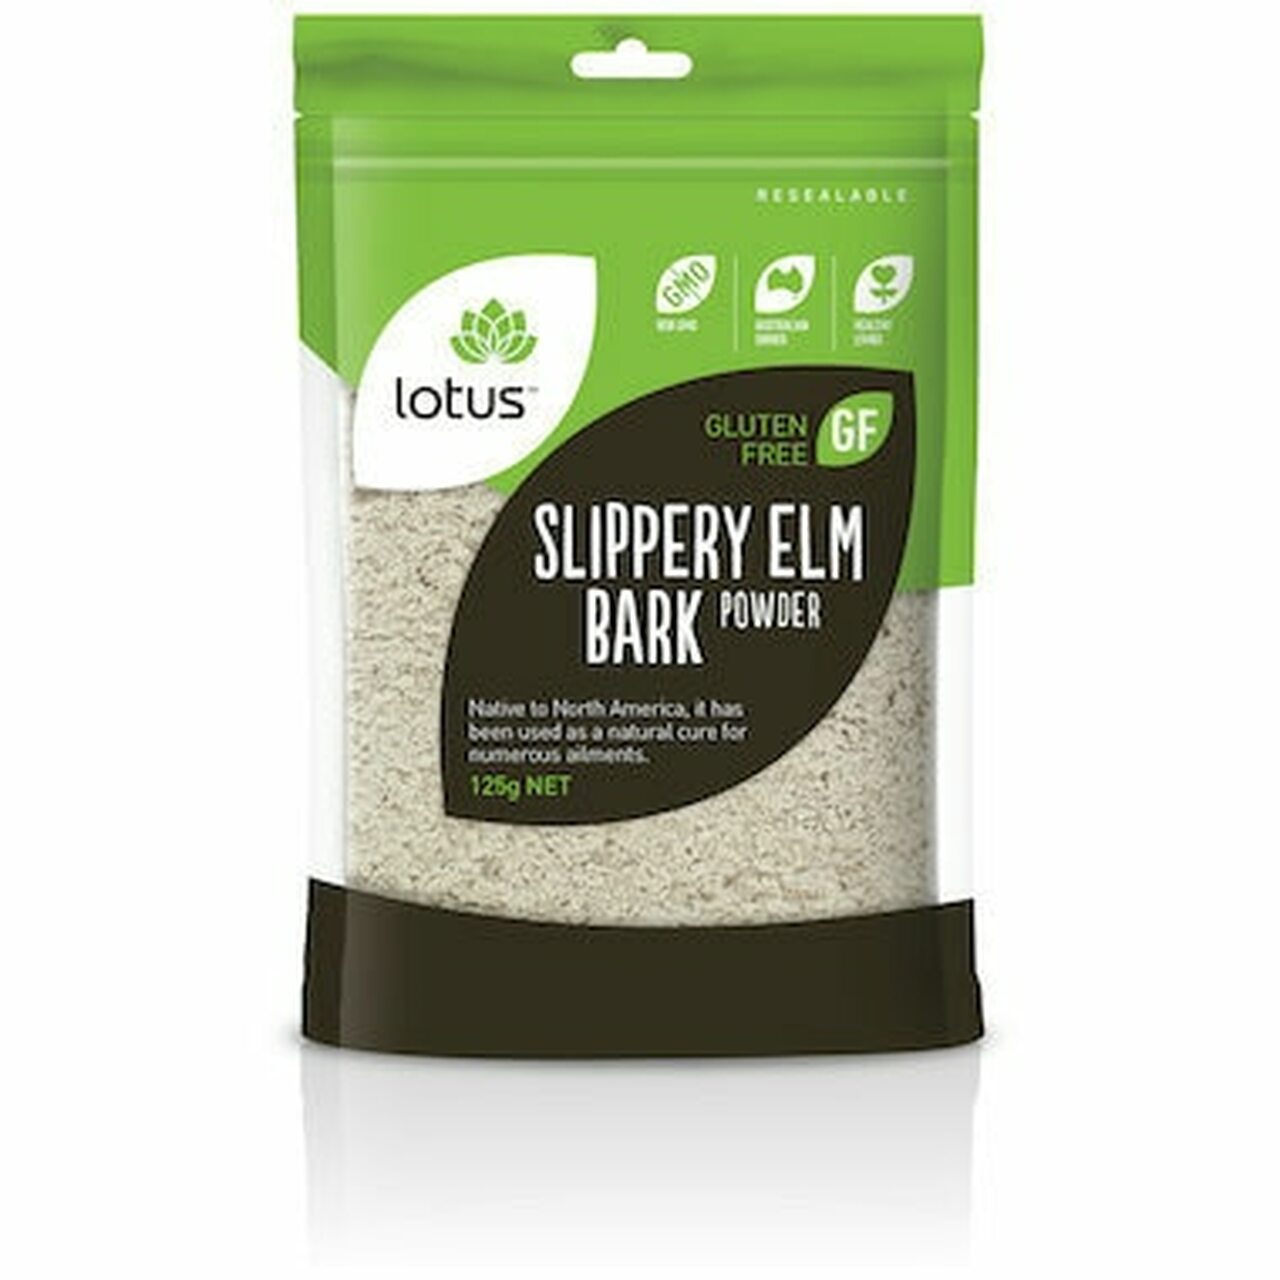 Lotus - Slippery Elm Bark Powder